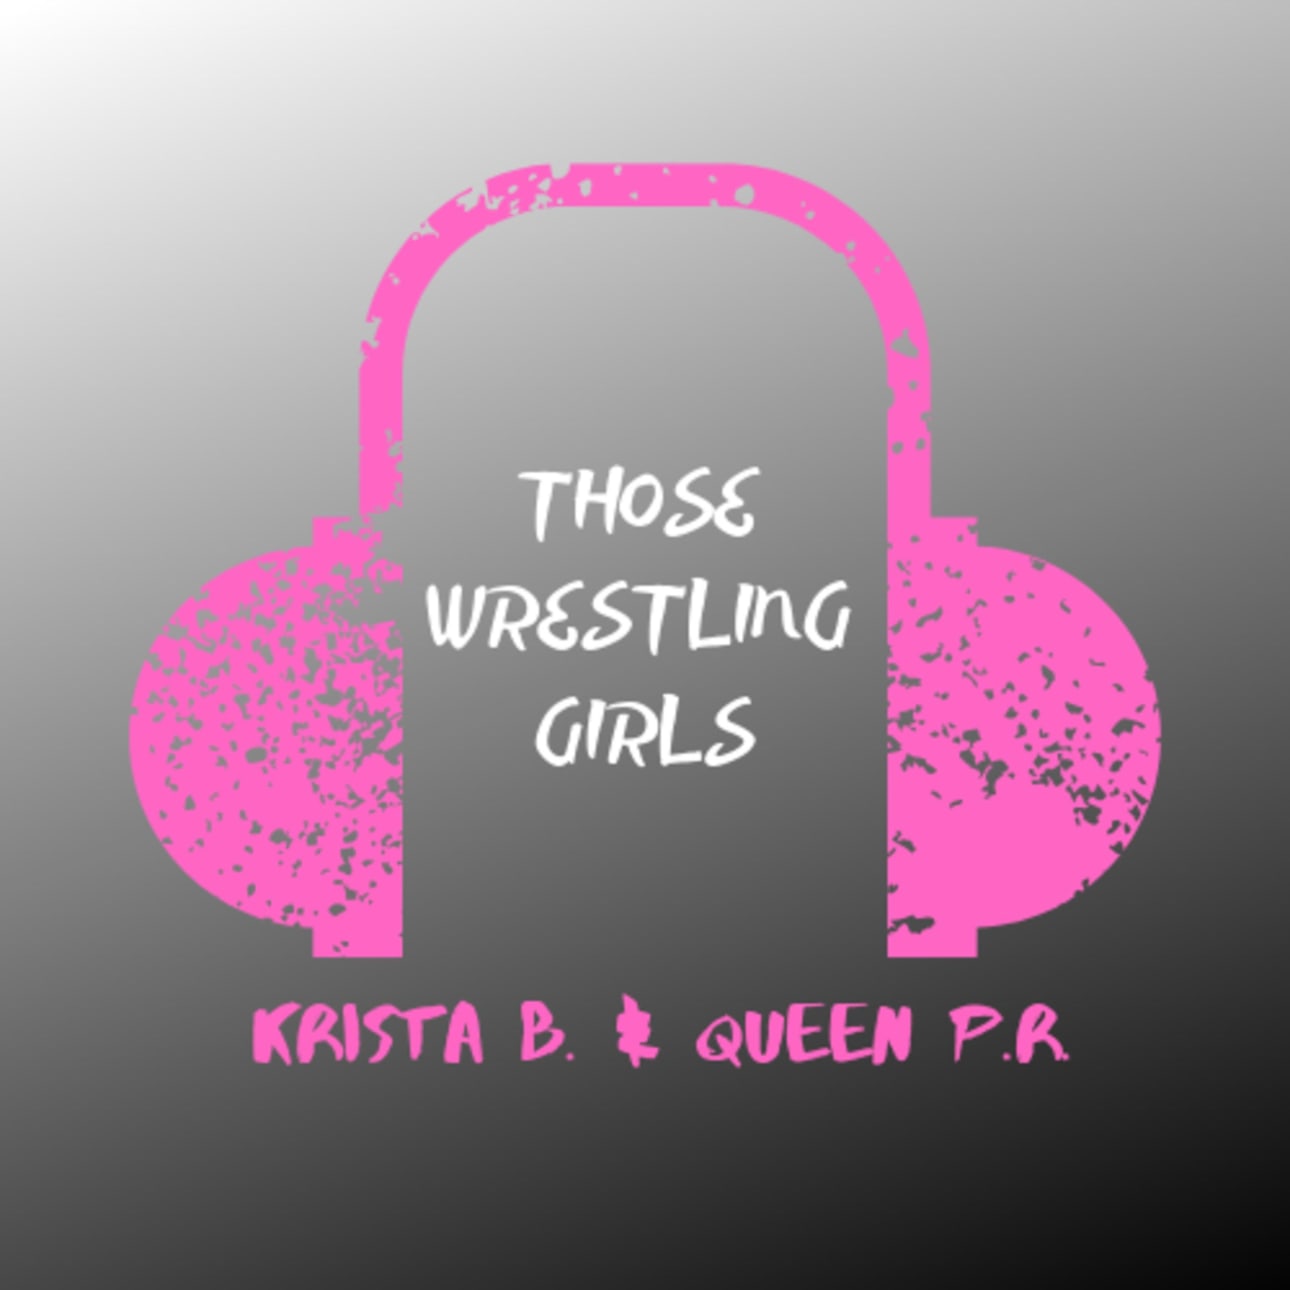 Those Wrestling Girls